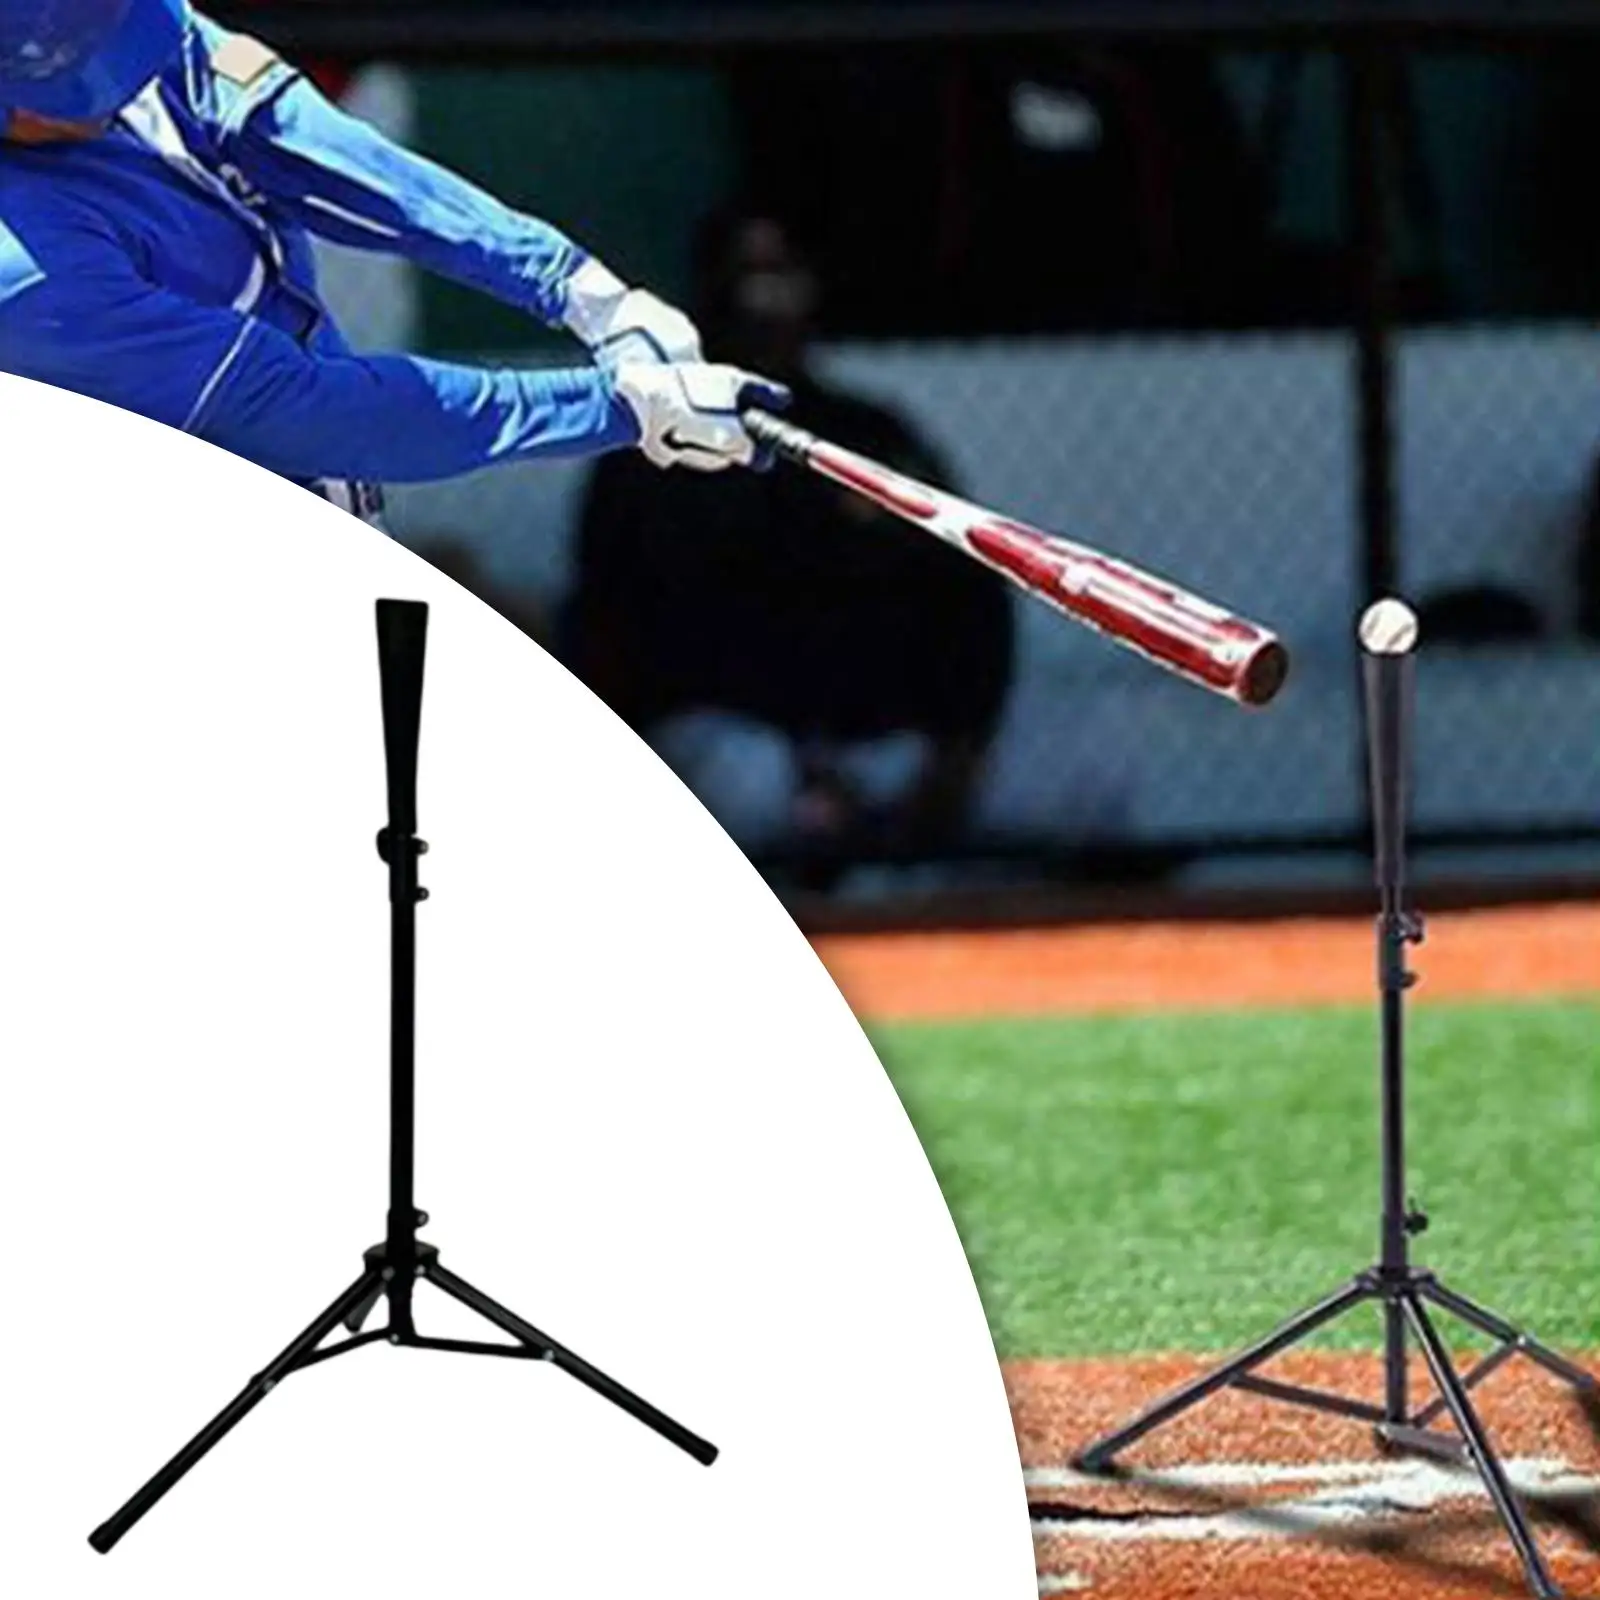 Baseball Softball Batting Tee Practice Trainer Height Adjustment Hitting Tee Stand for Men Hitting Lunging